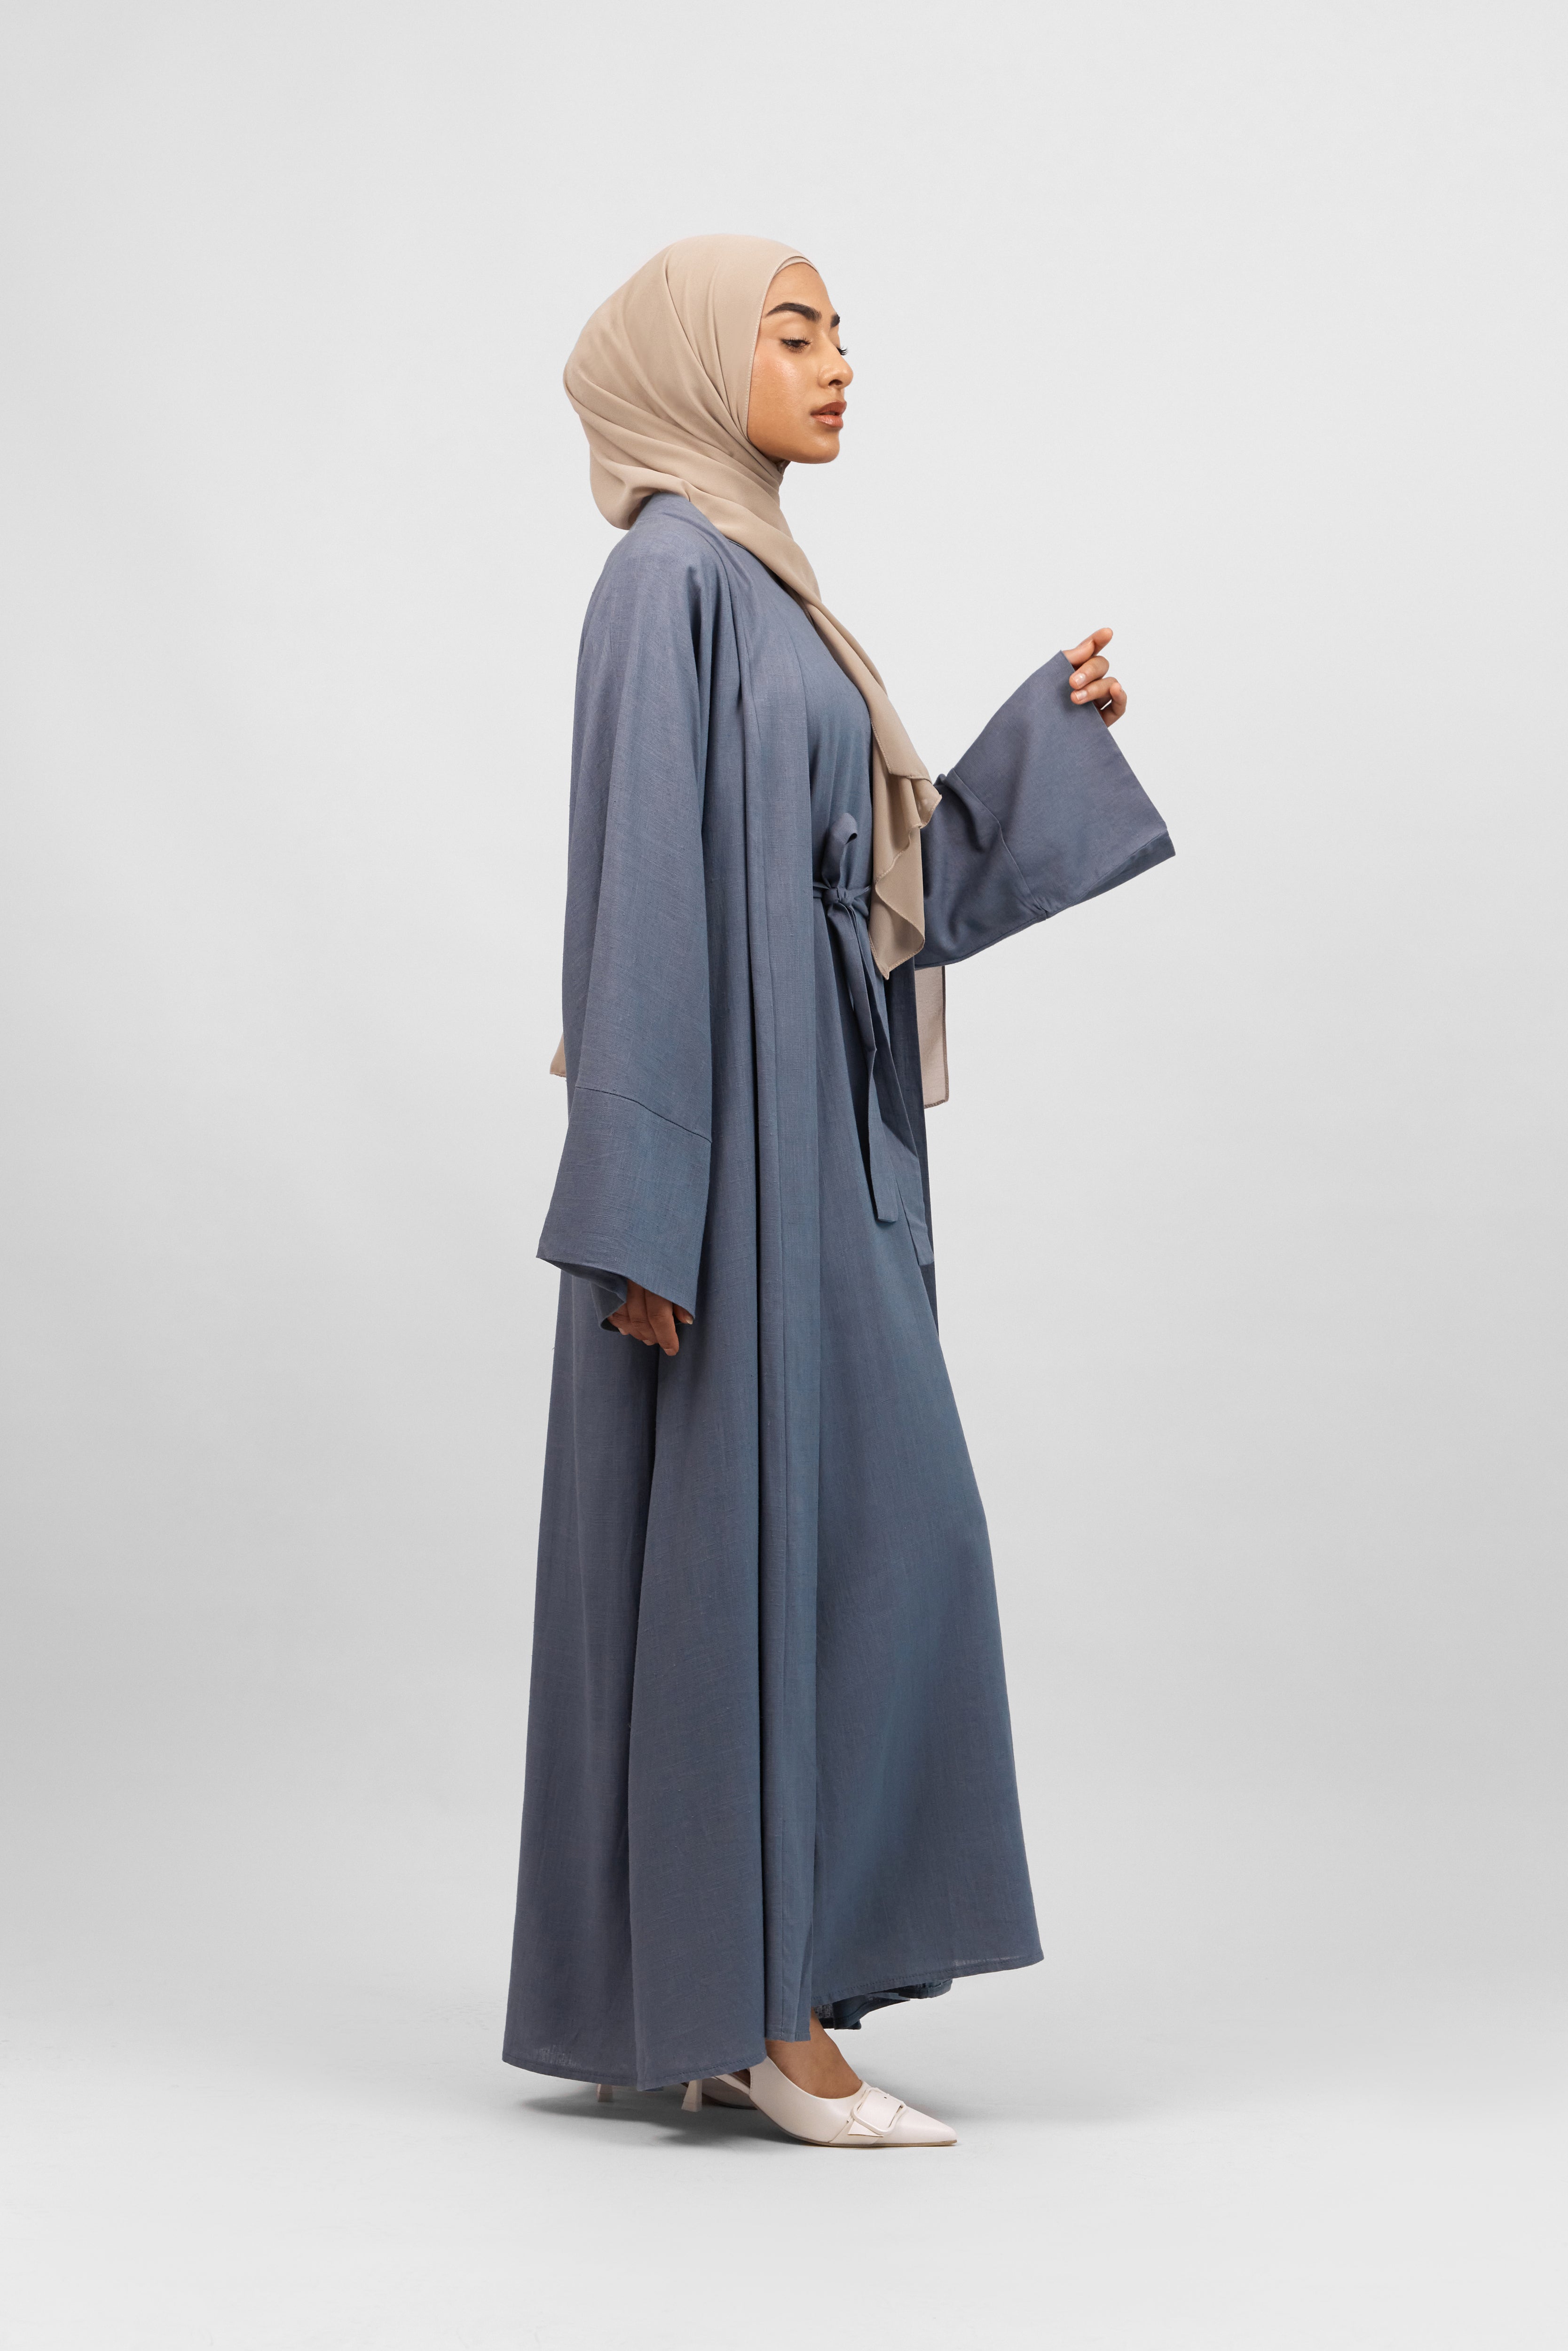 AE - Linen Blend Abaya Set - Denim